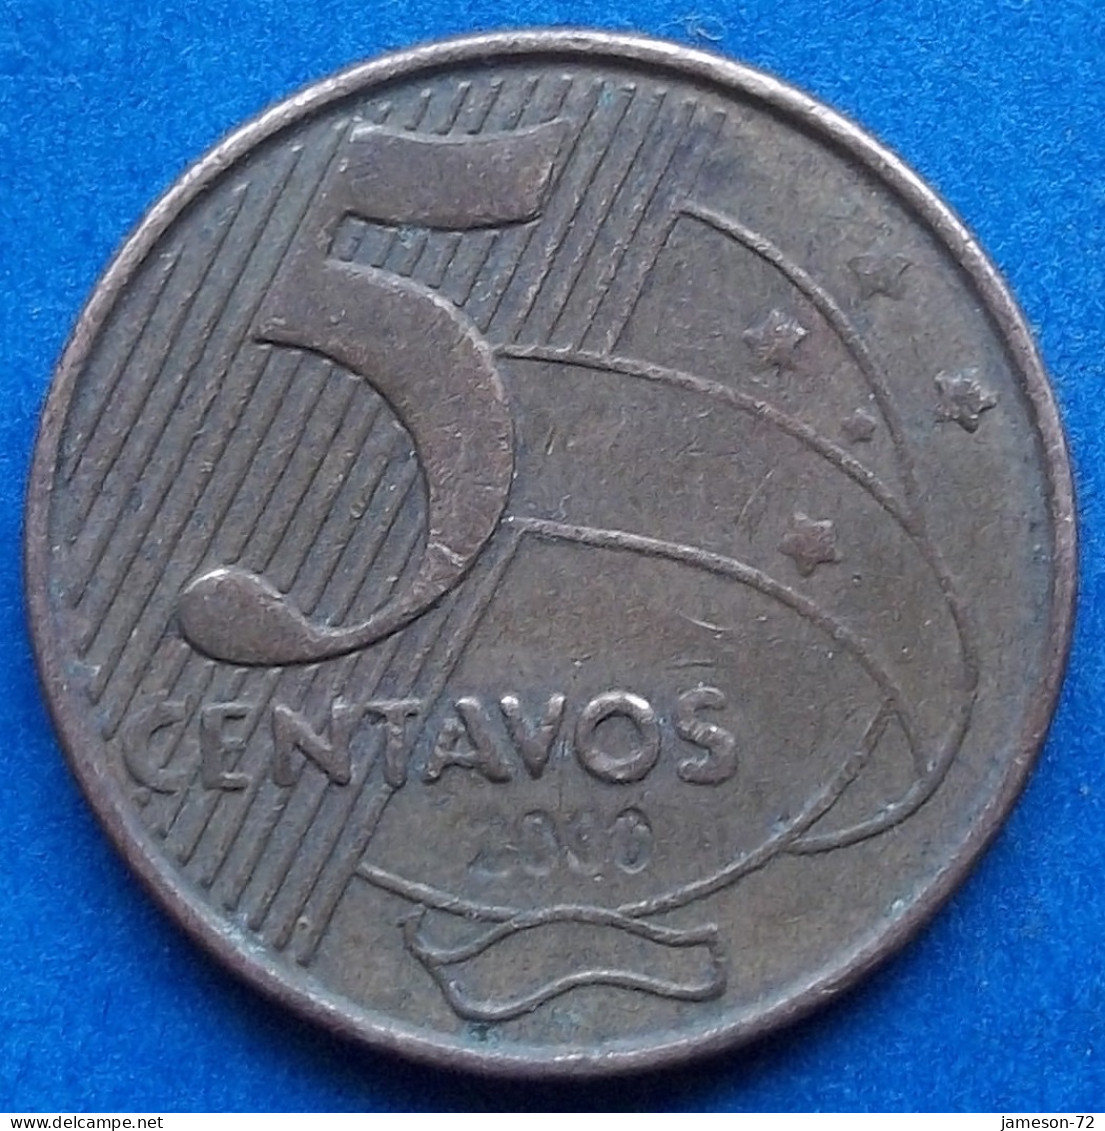 BRAZIL - 5 Centavos 2000 "Tiradentes" KM# 648 Monetary Reform (1994) - Edelweiss Coins - Brazil